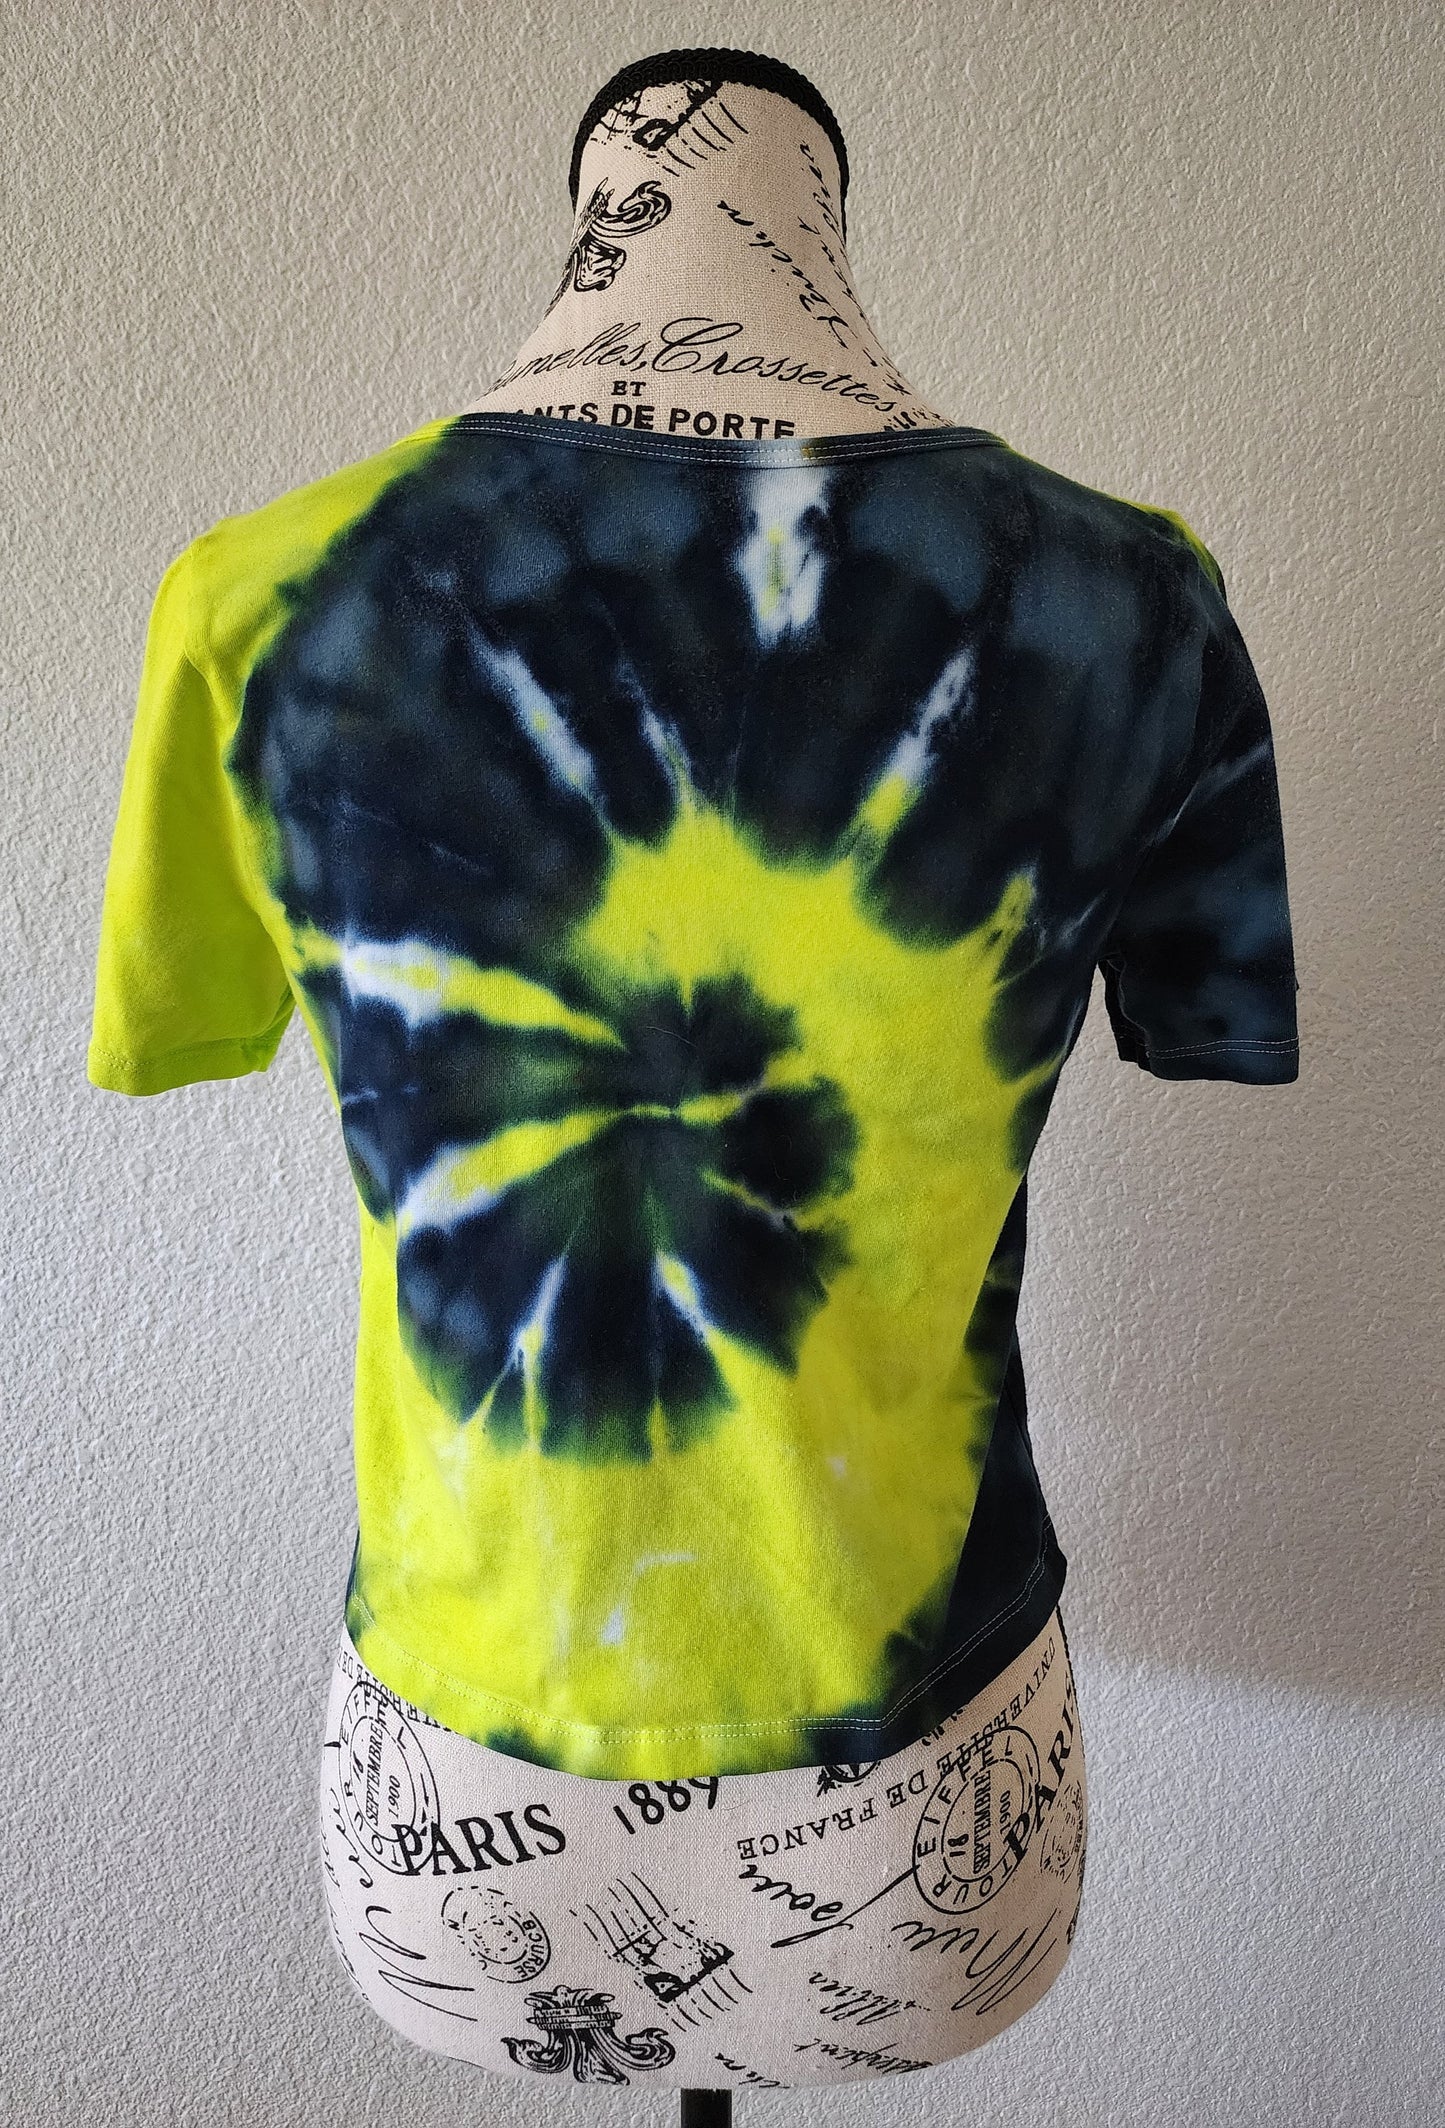 Neon Yellow & Black Tie Dye Crop Shirt Juniors Size XL